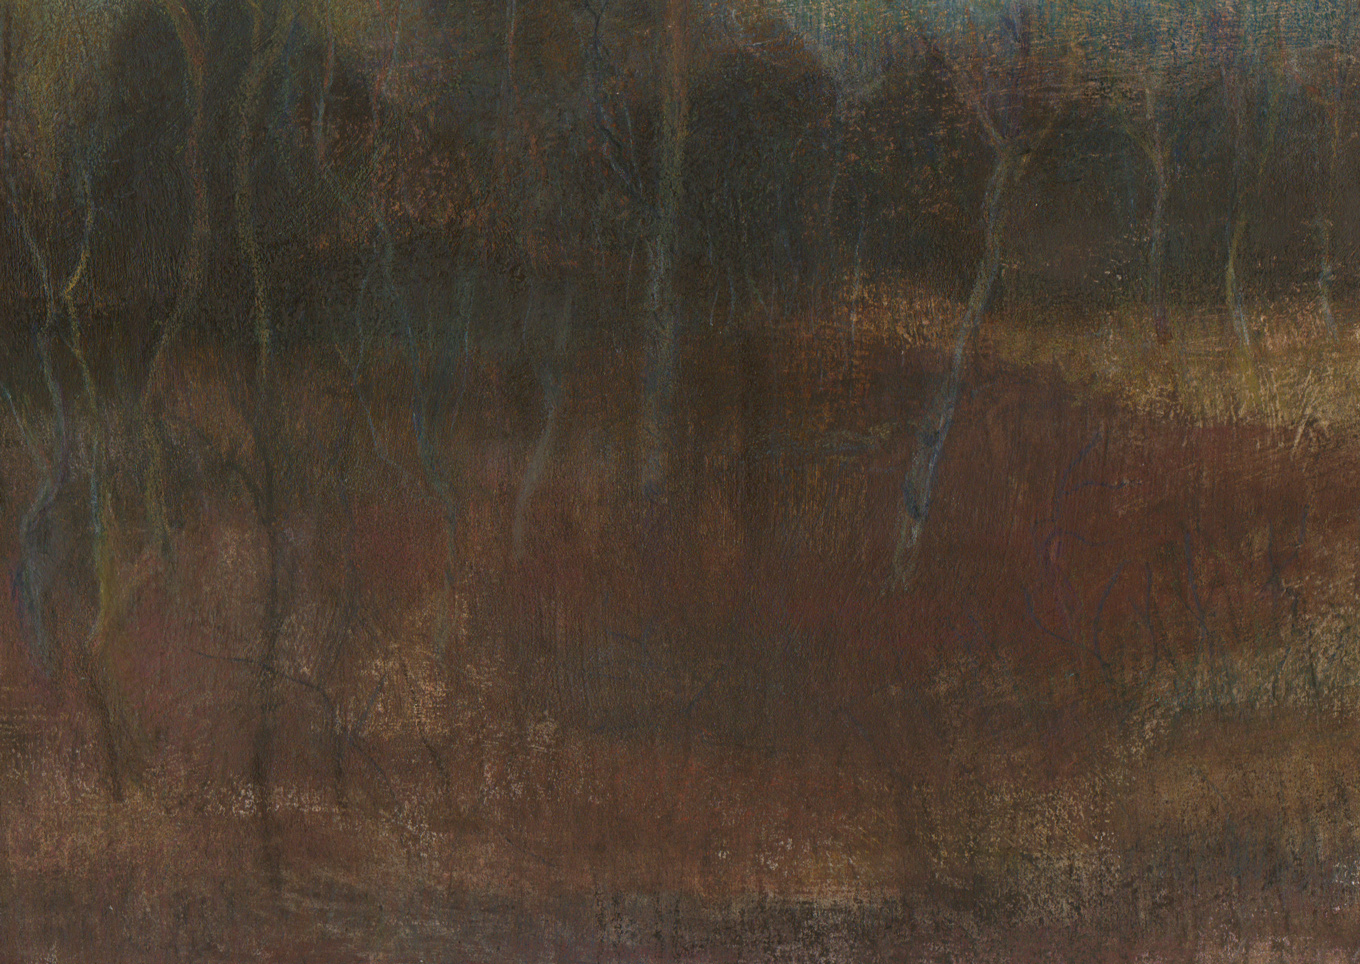 L1196 - Nicholas Herbert, British Artist, mixed media landscape painting of Chobham Common, mixed media on paper,Winter 2019-2020